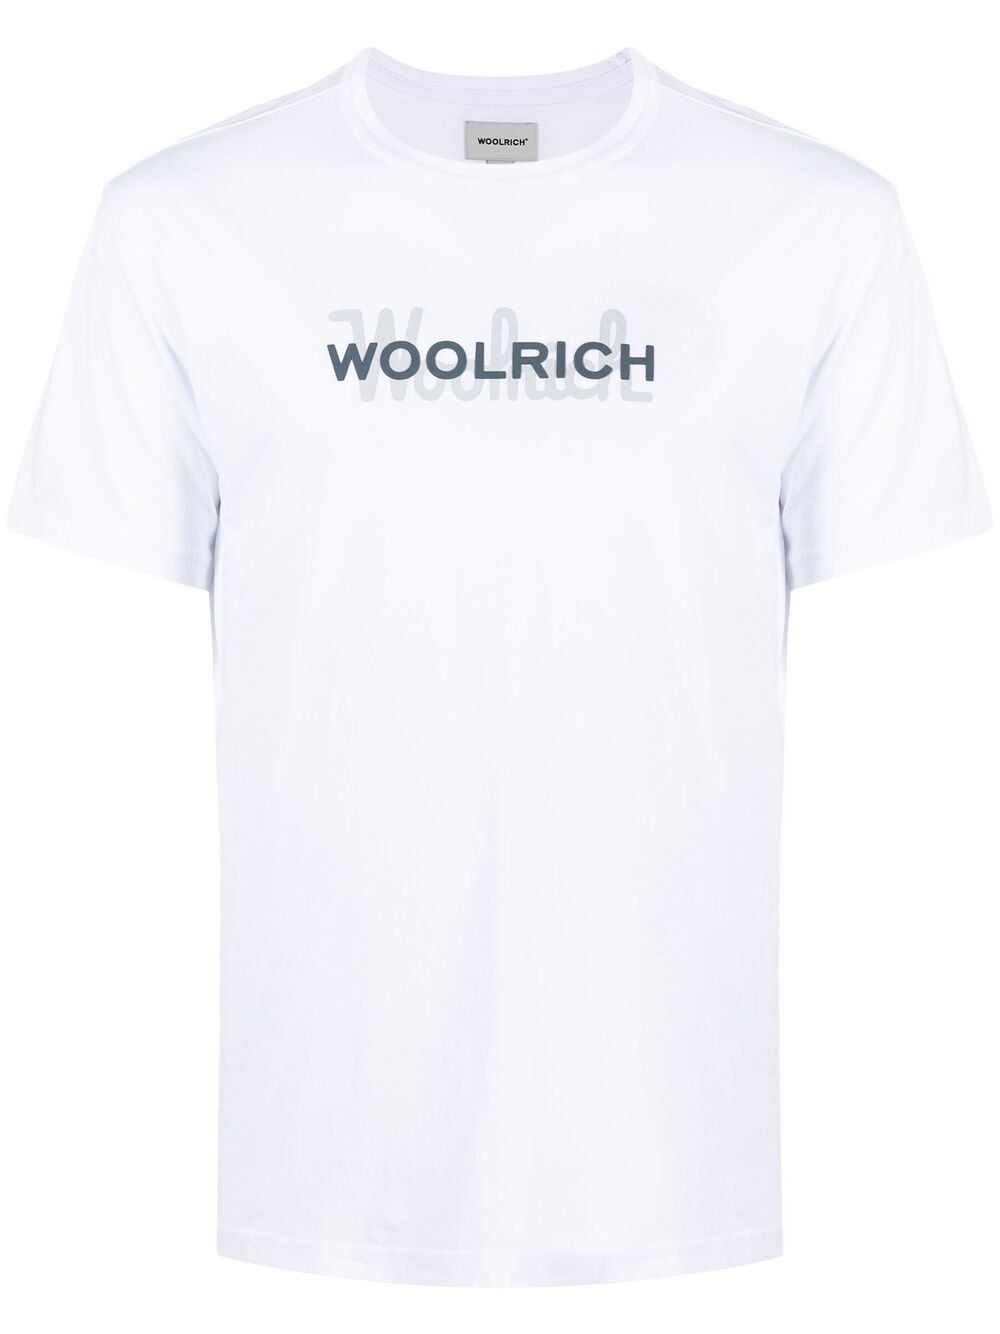 фото Woolrich футболка с логотипом